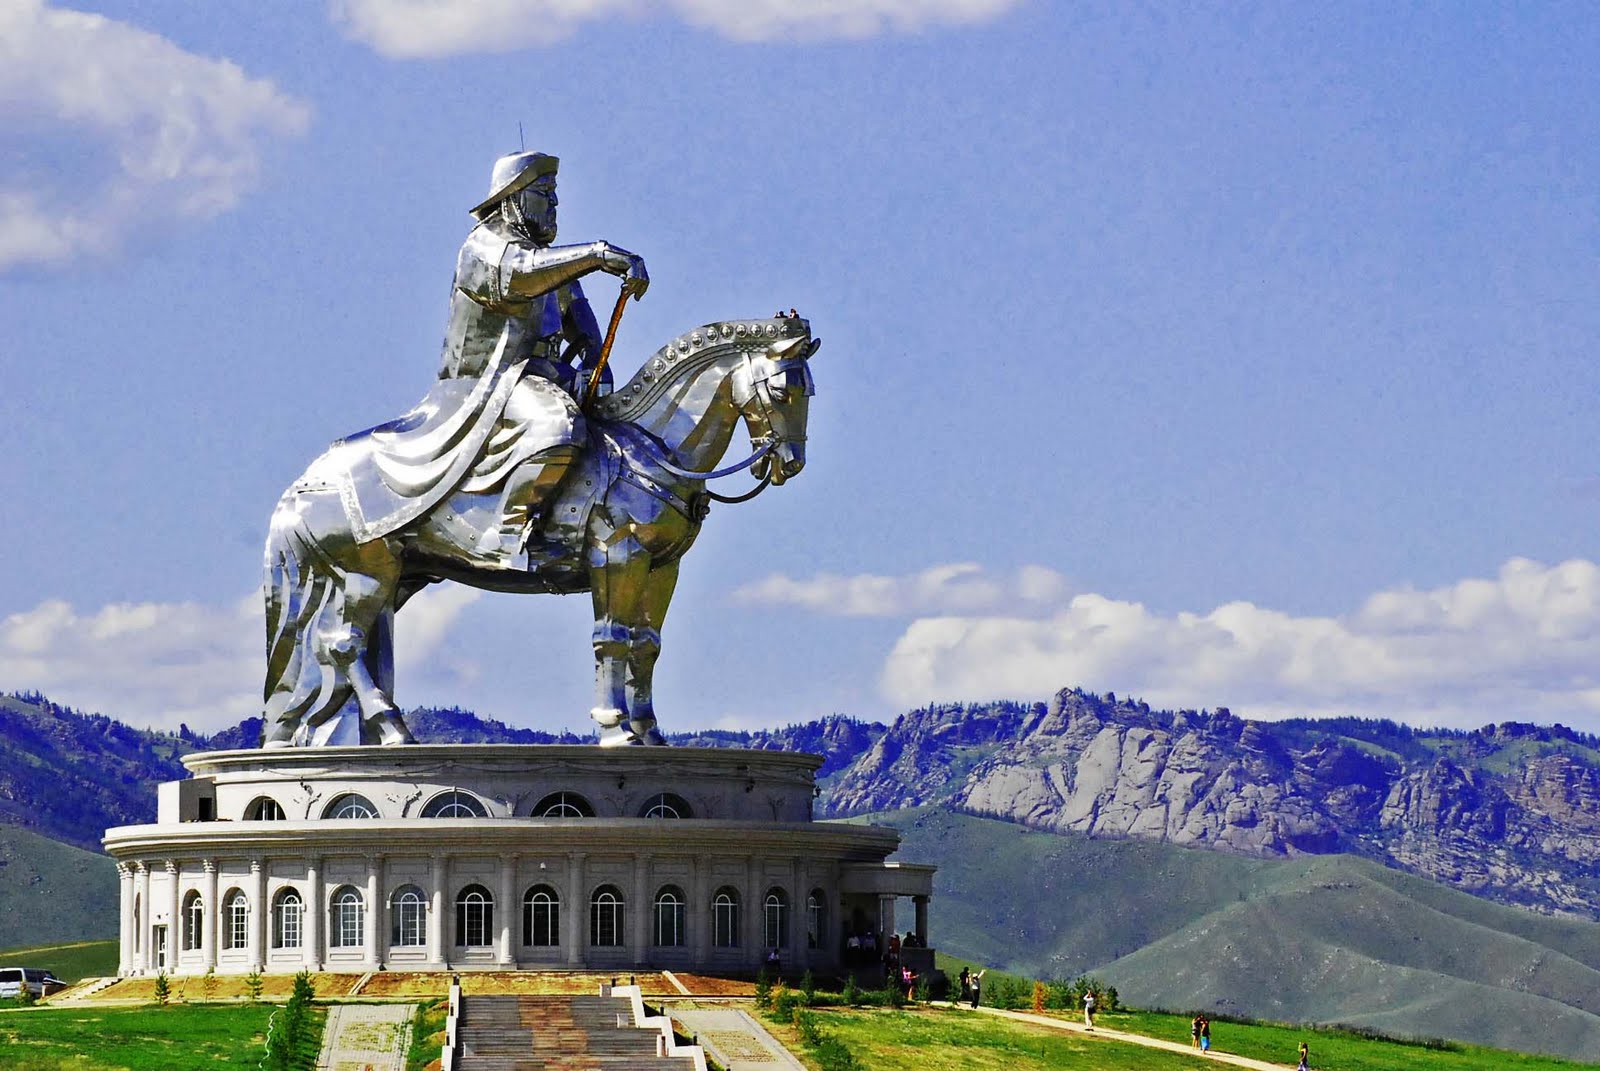 Улан хане. Статуя Чингисхана в Монголии. Памятник Чингисхану в Улан-Баторе. Конная статуя Чингисхана в Монголии. Статуя Чингисхана в Цонжин-Болдоге Улан-Батор.